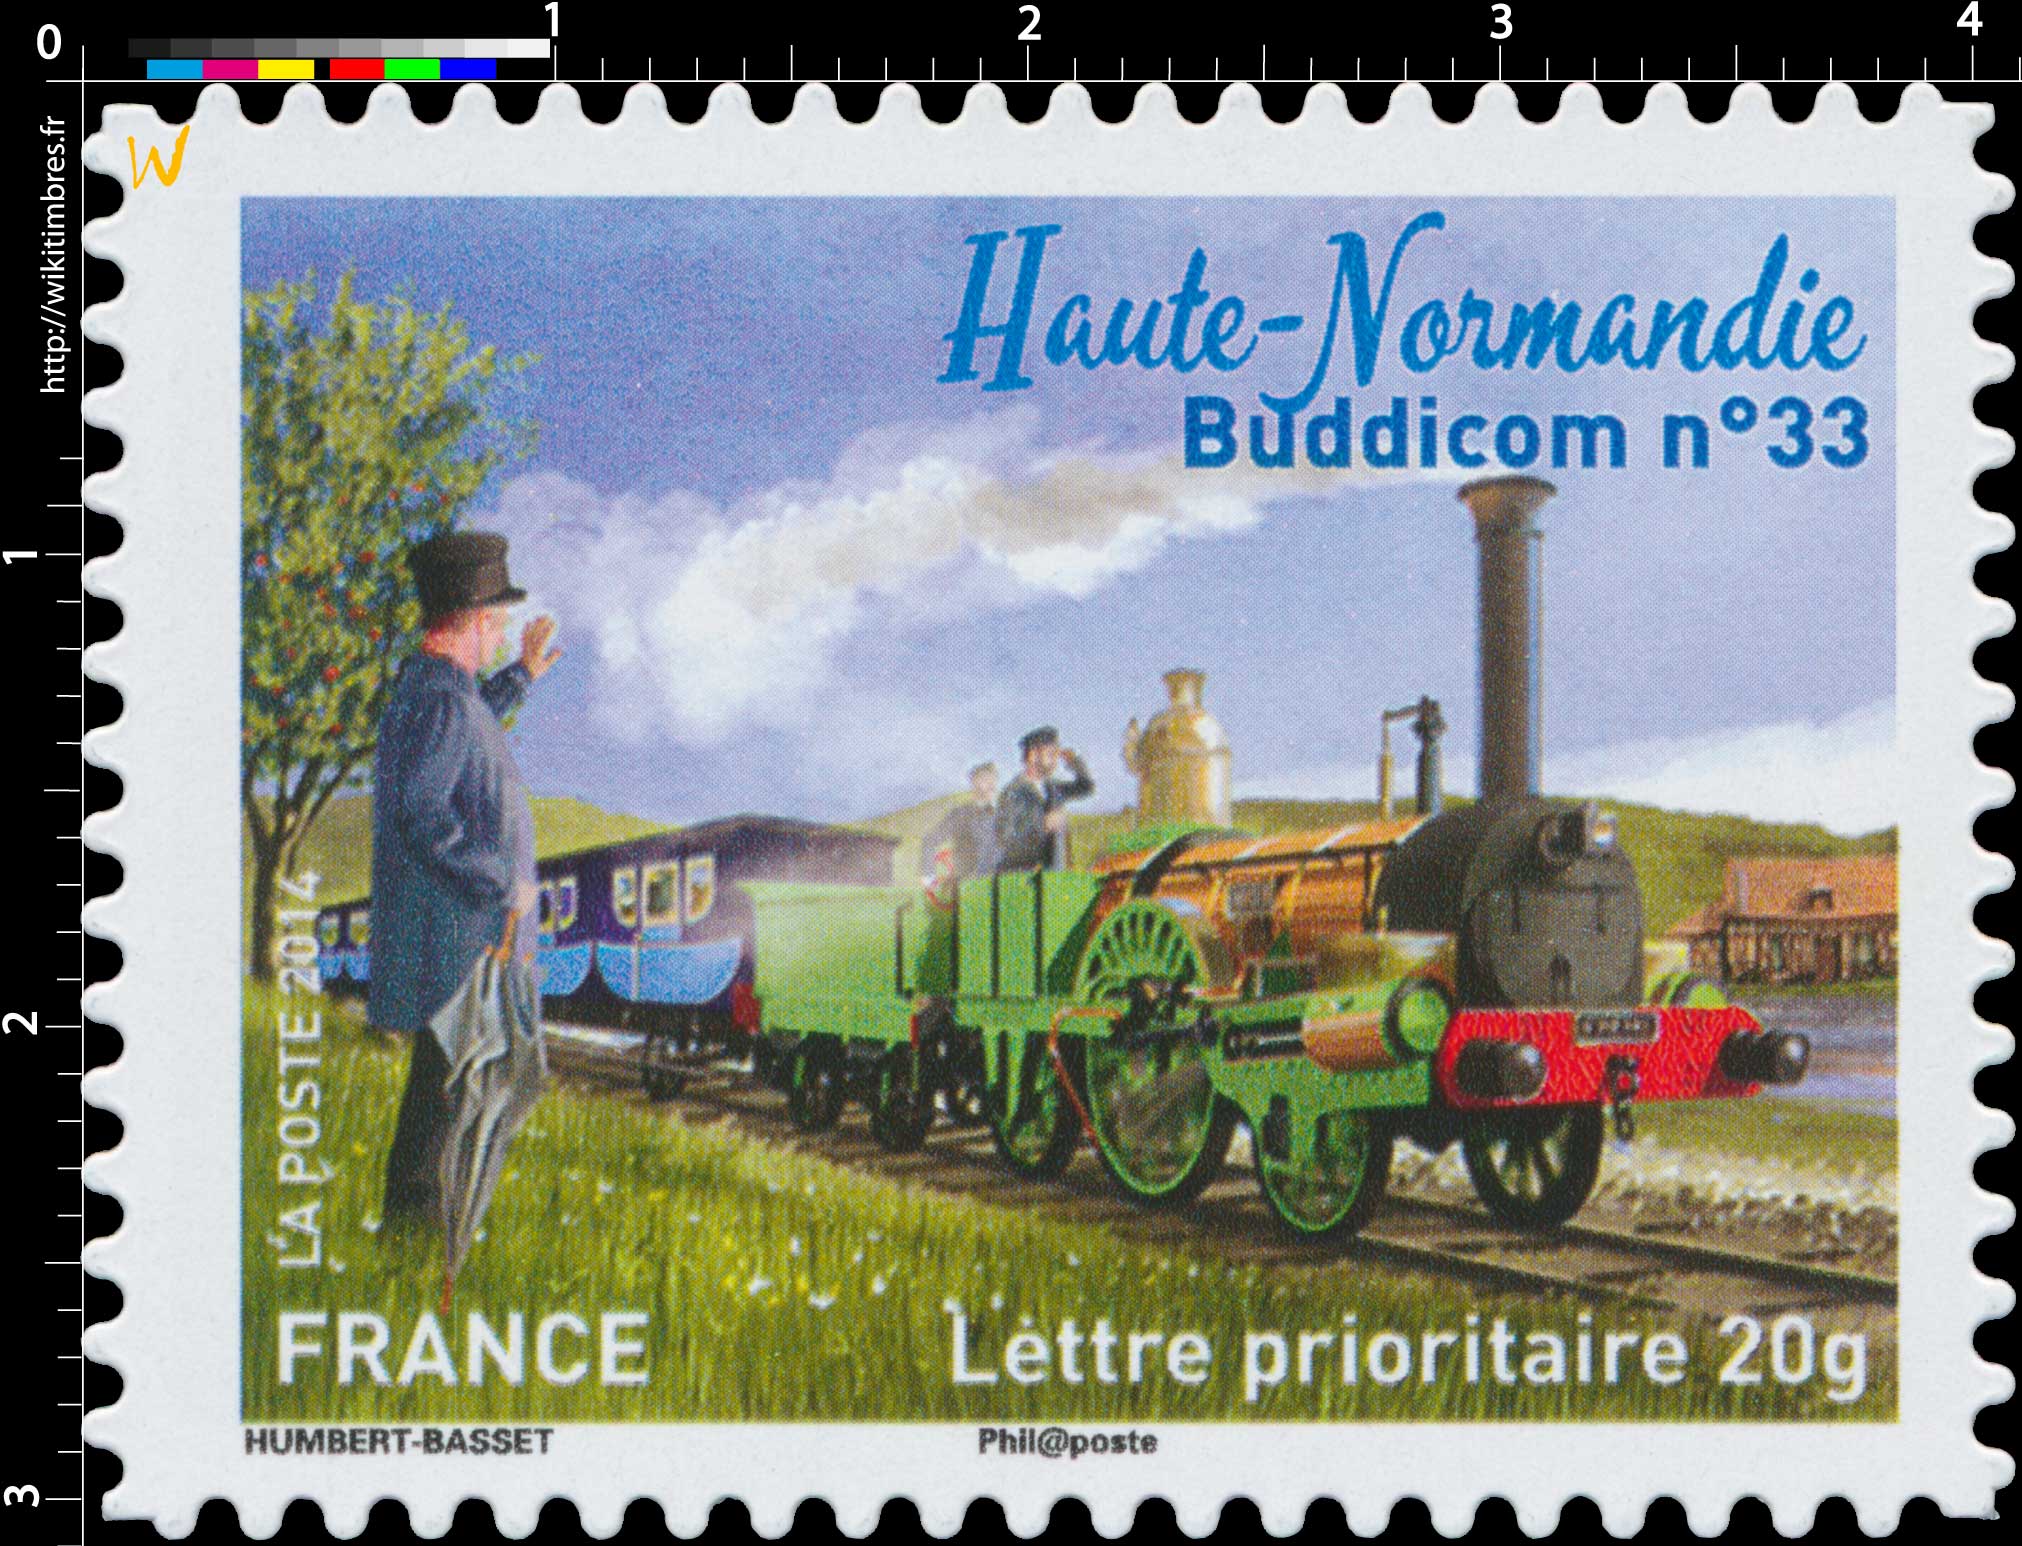 2014 Haute-Normandie Buddicom n°33